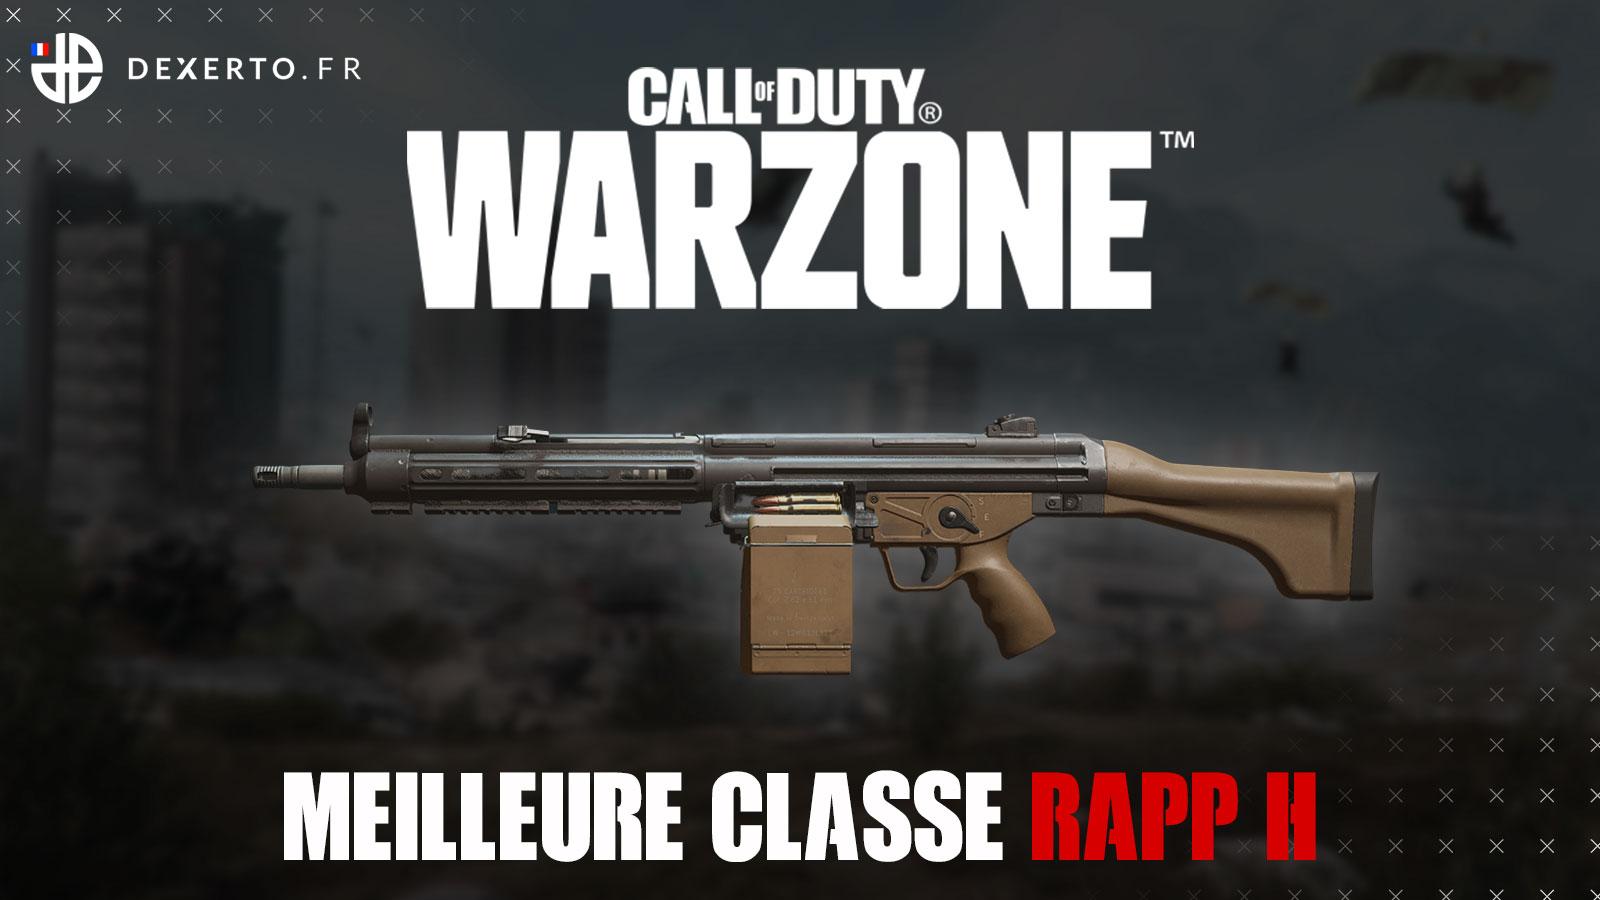 Warzone Rapp H meilleure classe